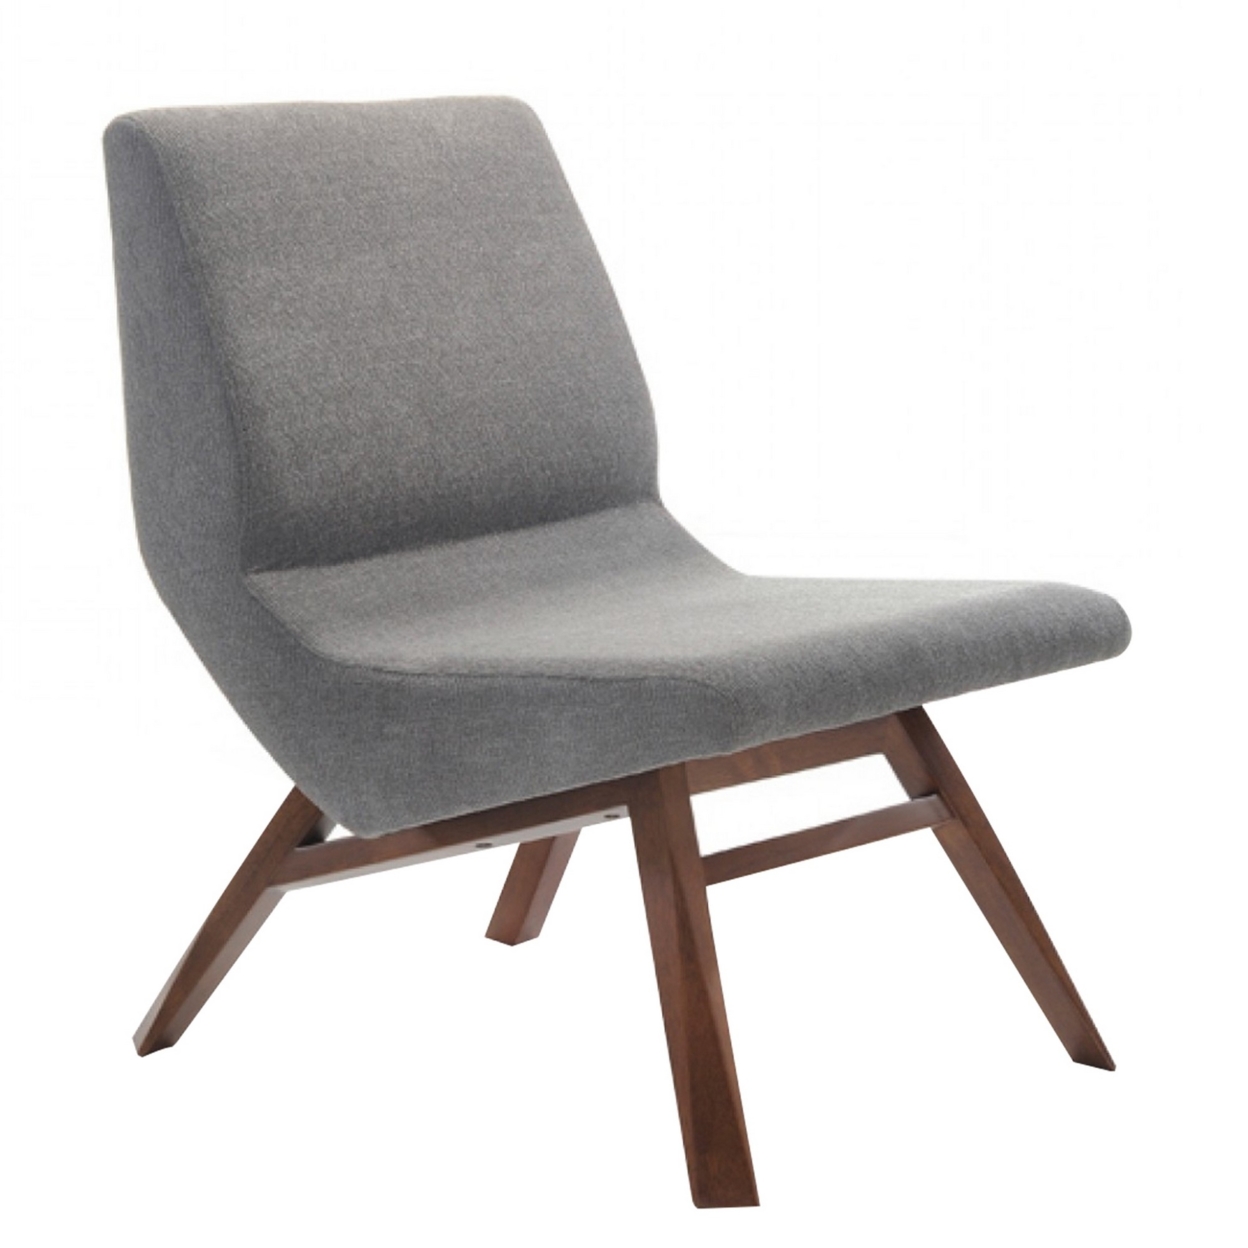 Cid 27 Inch Modern Wood Side Chair, Contoured Back, Ottoman, Walnut, Gray- Saltoro Sherpi